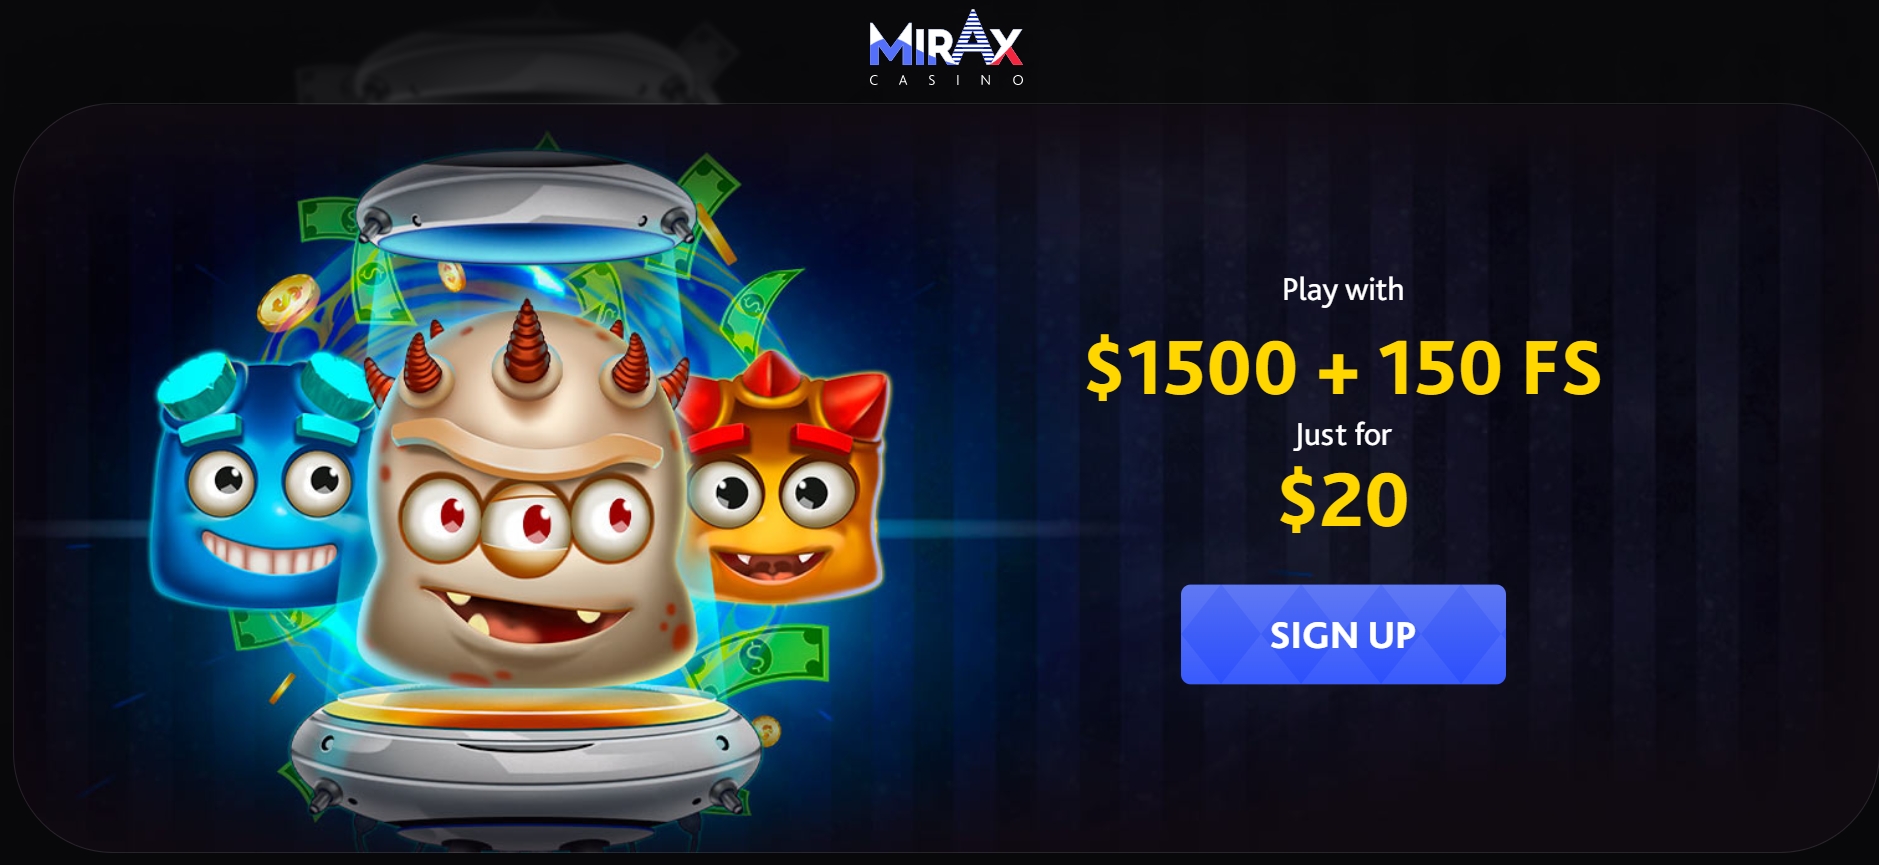 mirax bonus for $20